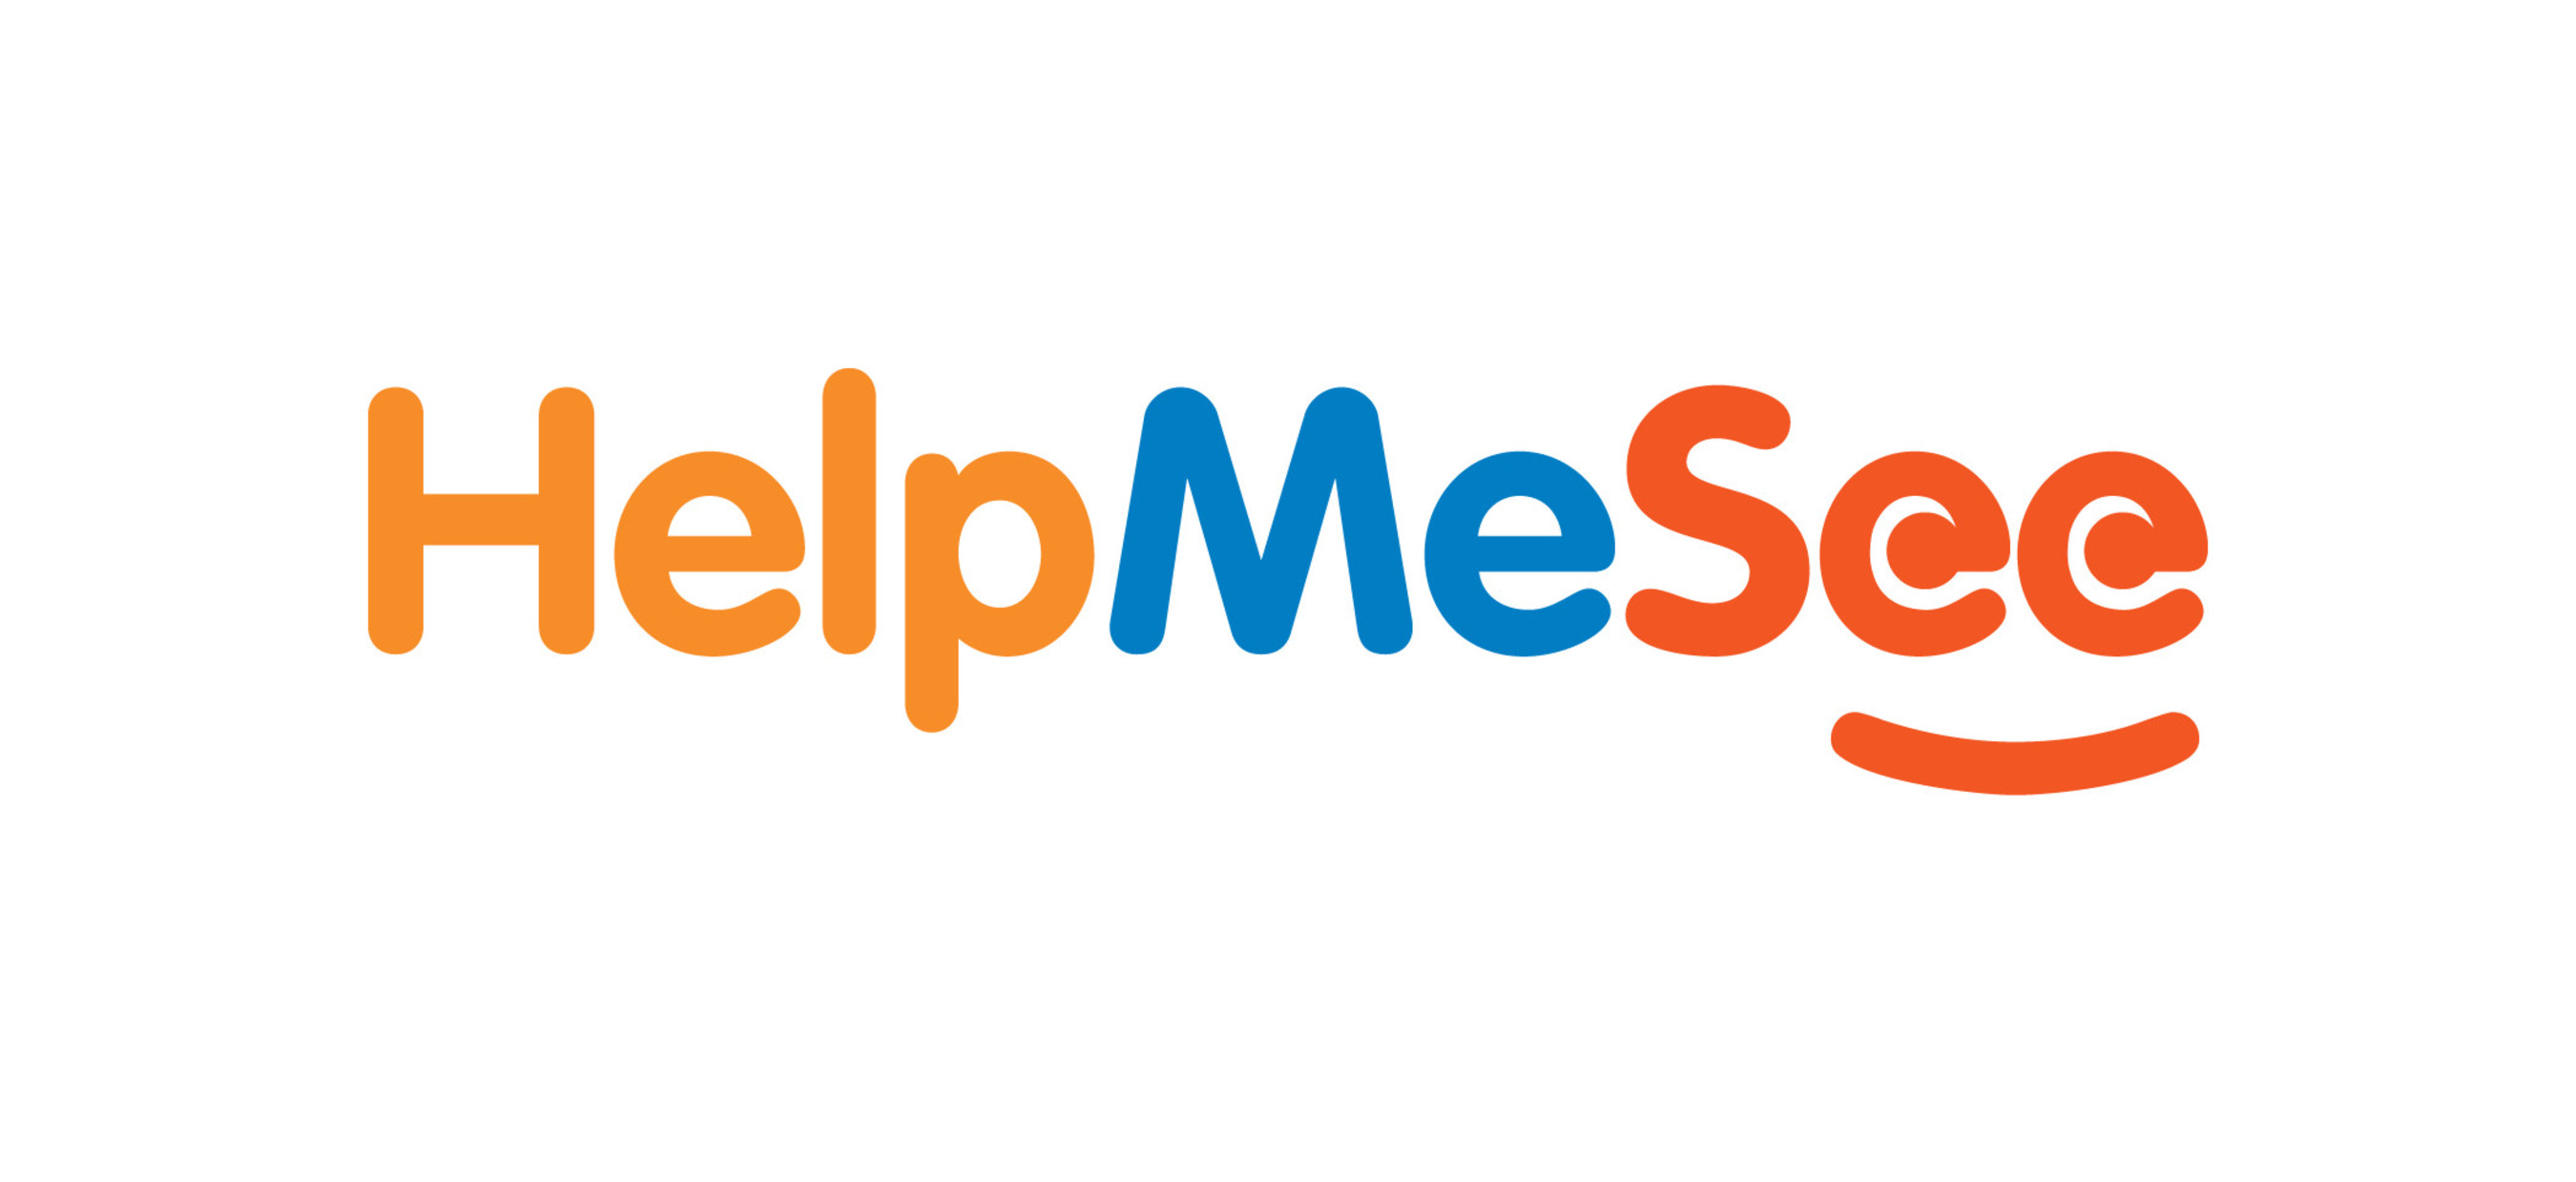 HelpMeSee Logo. (PRNewsFoto/HELPMESEE) (PRNewsFoto/)